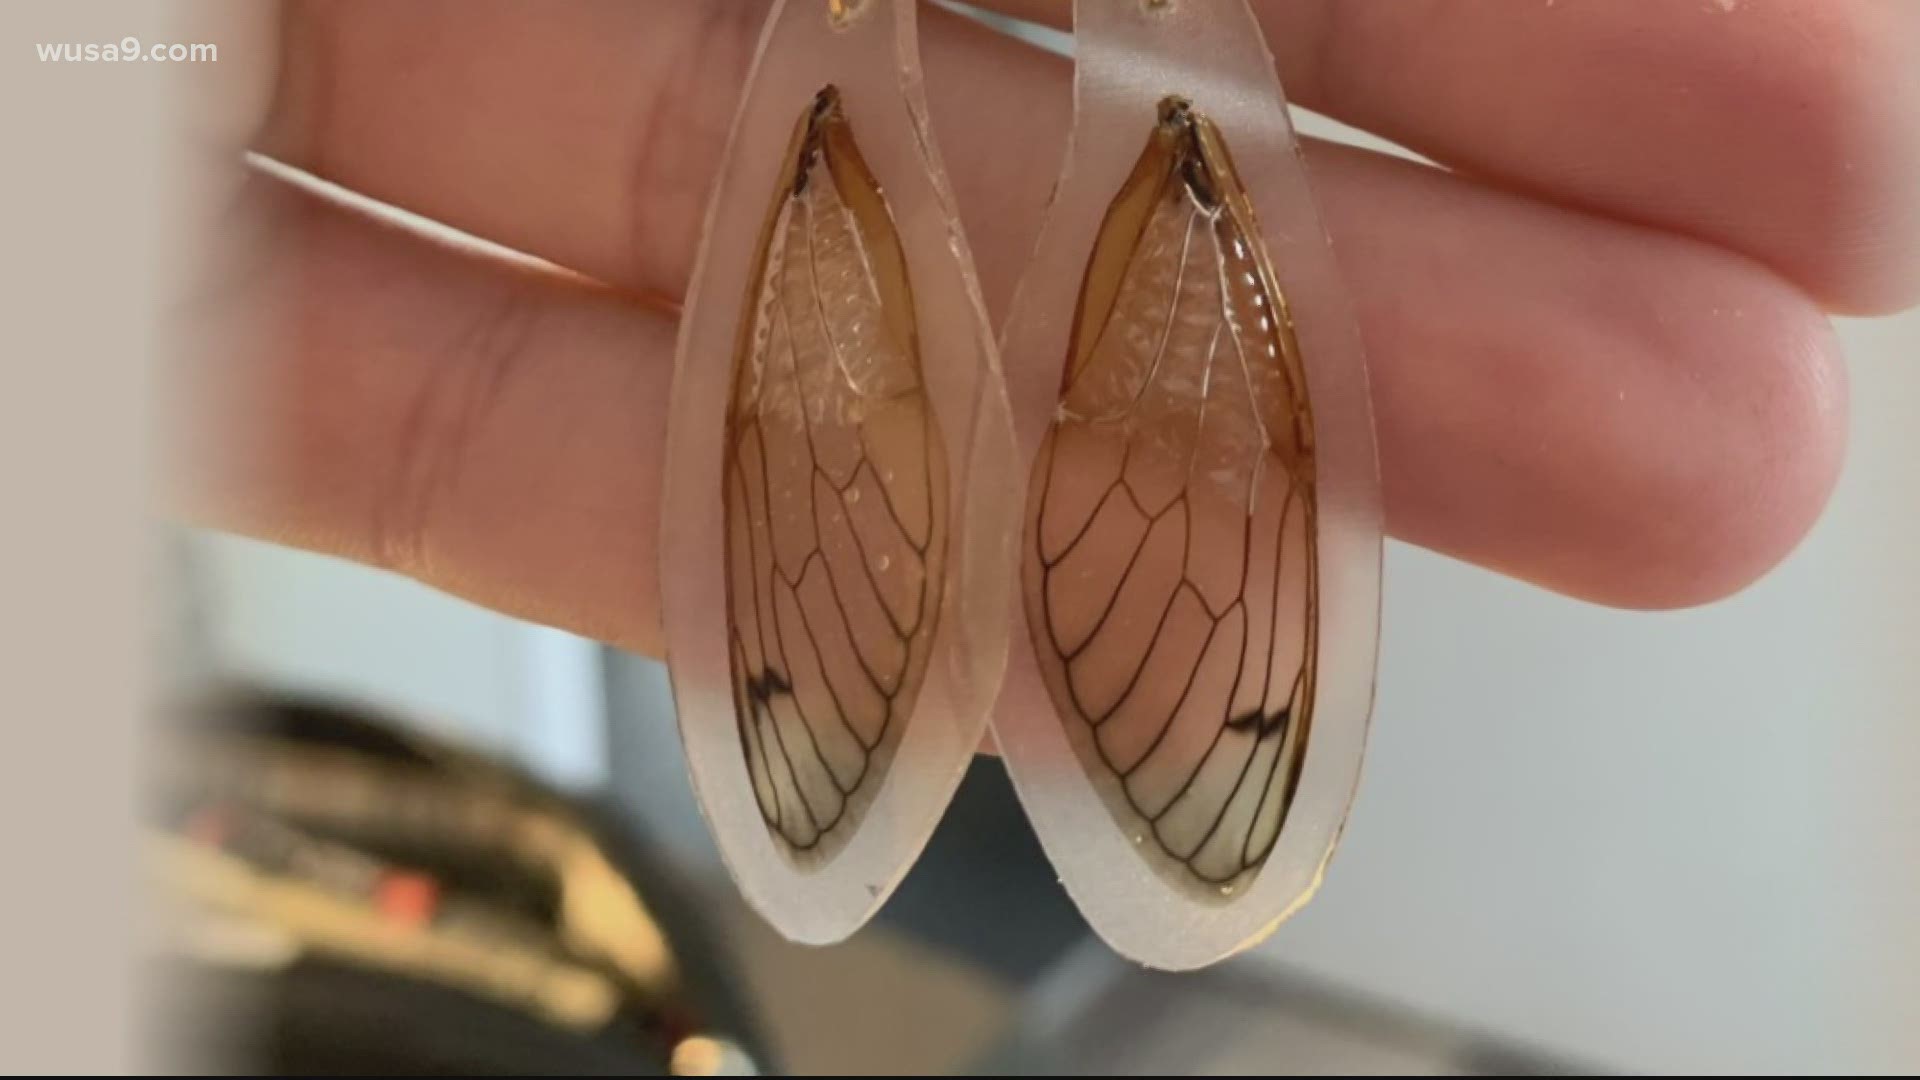 Rebekah Raible makes intricate earrings out of cicada wings.